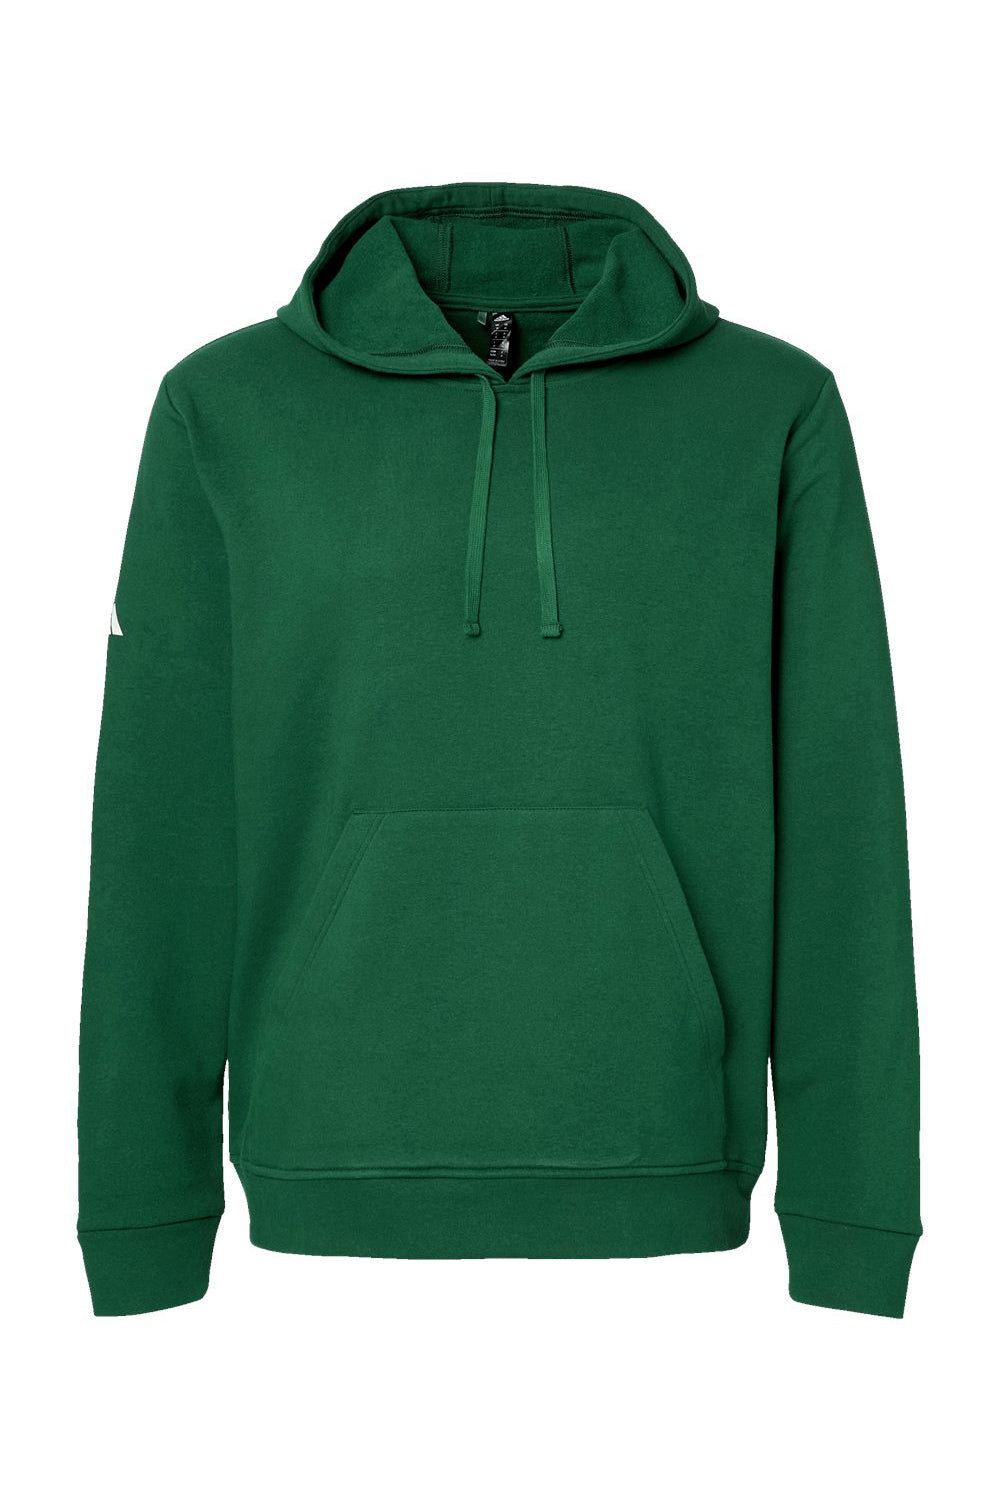 Adidas A432 Mens Fleece Hooded Sweatshirt Hoodie Collegiate Green Flat Front